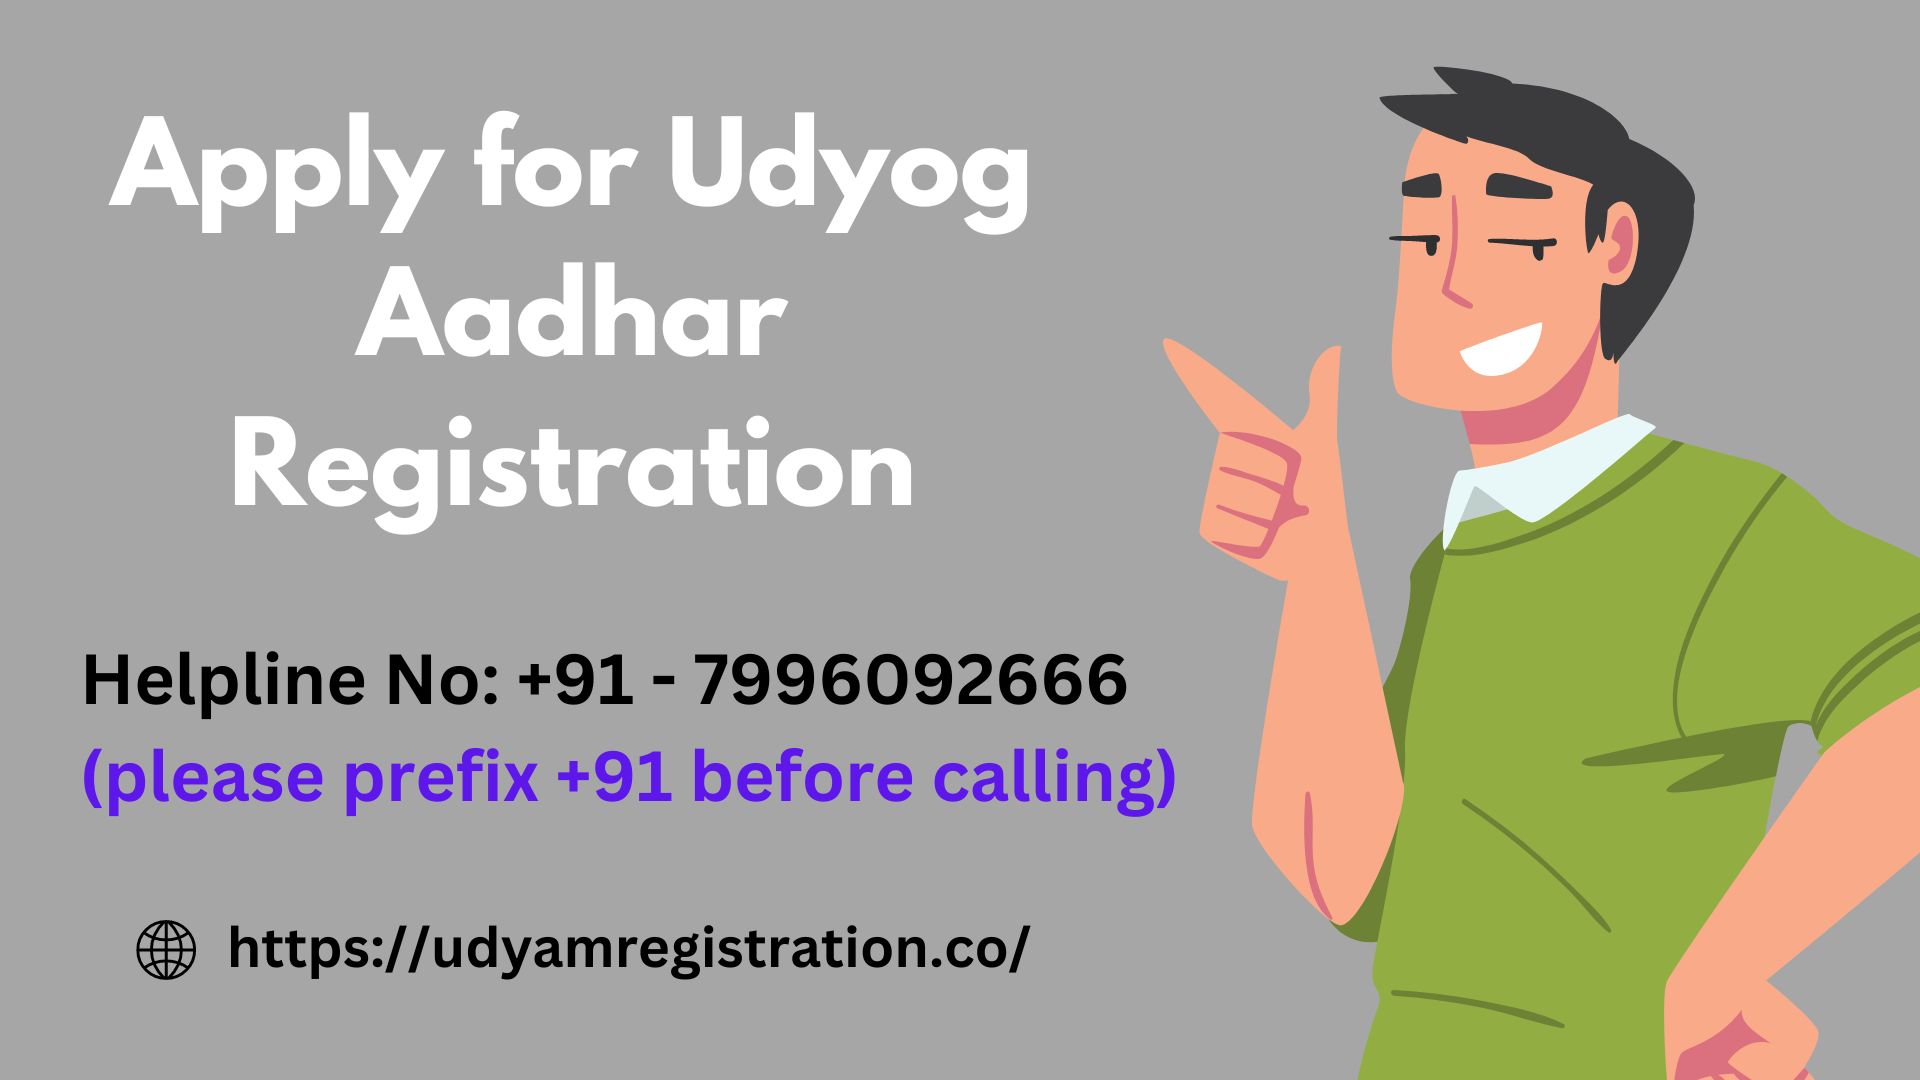 Apply for Udyog Aadhar Registration